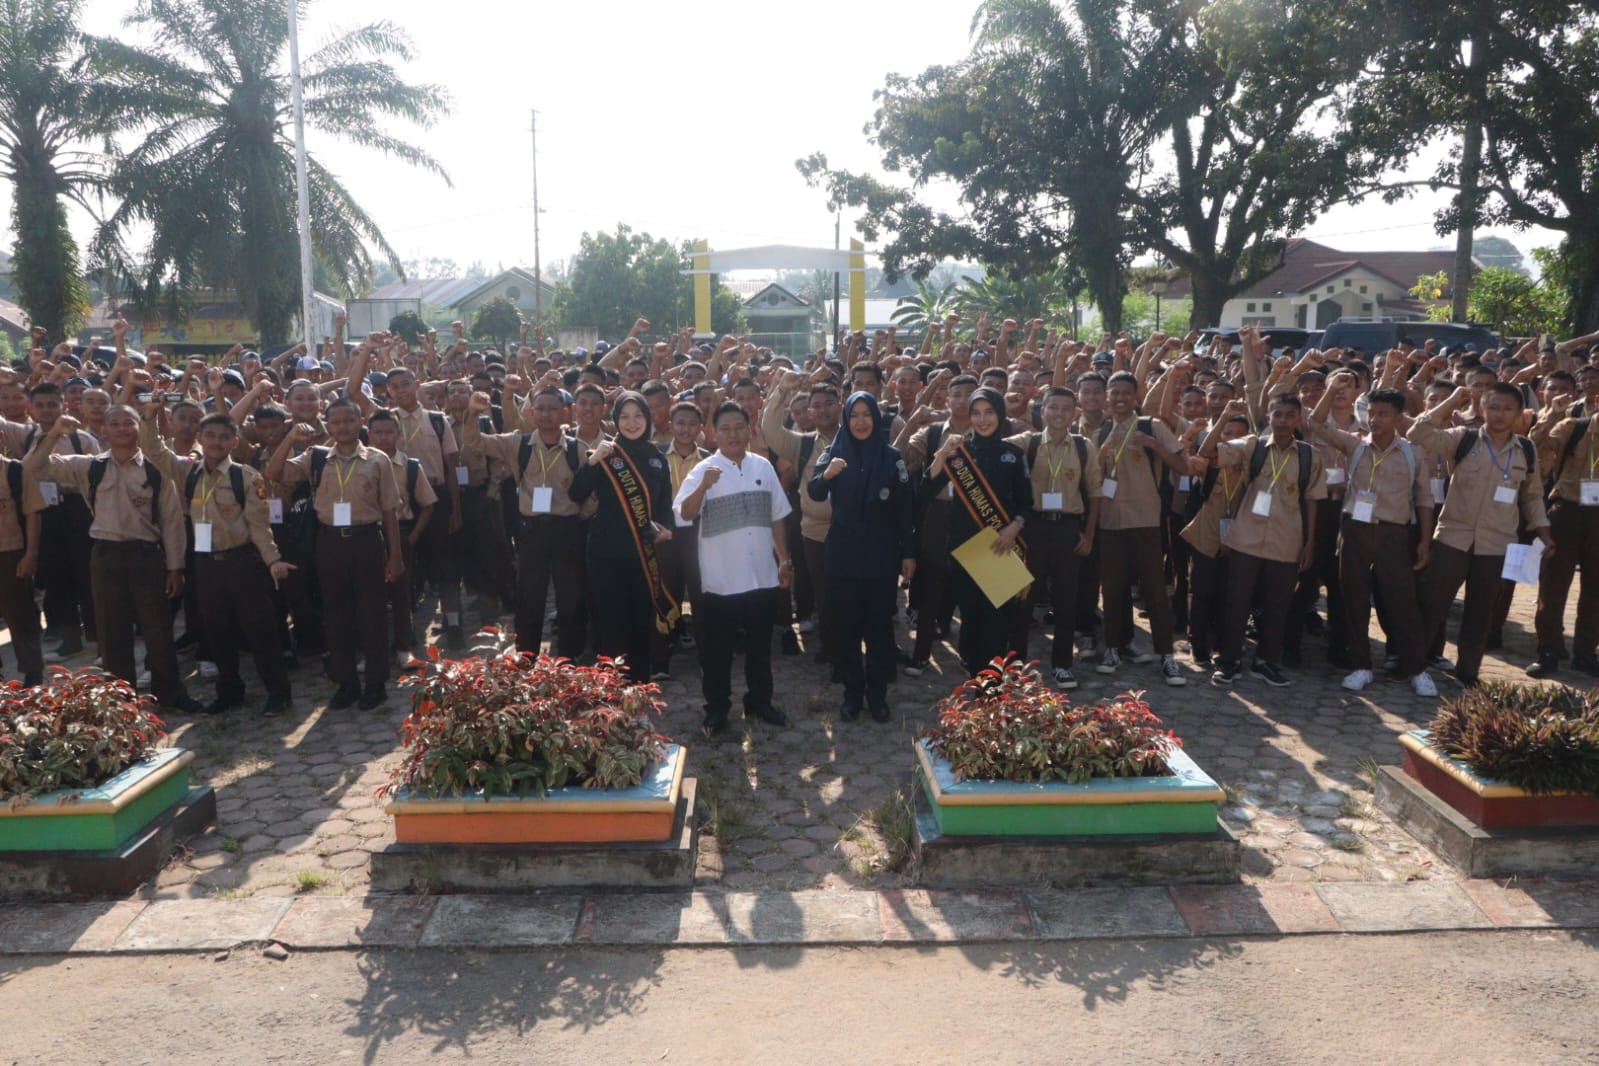 Sosialisasi Pencegahan Kenakalan Remaja dan Radikalisme, Bid Humas Polda Bengkulu Kunjungi Siswa Baru SMKN 2